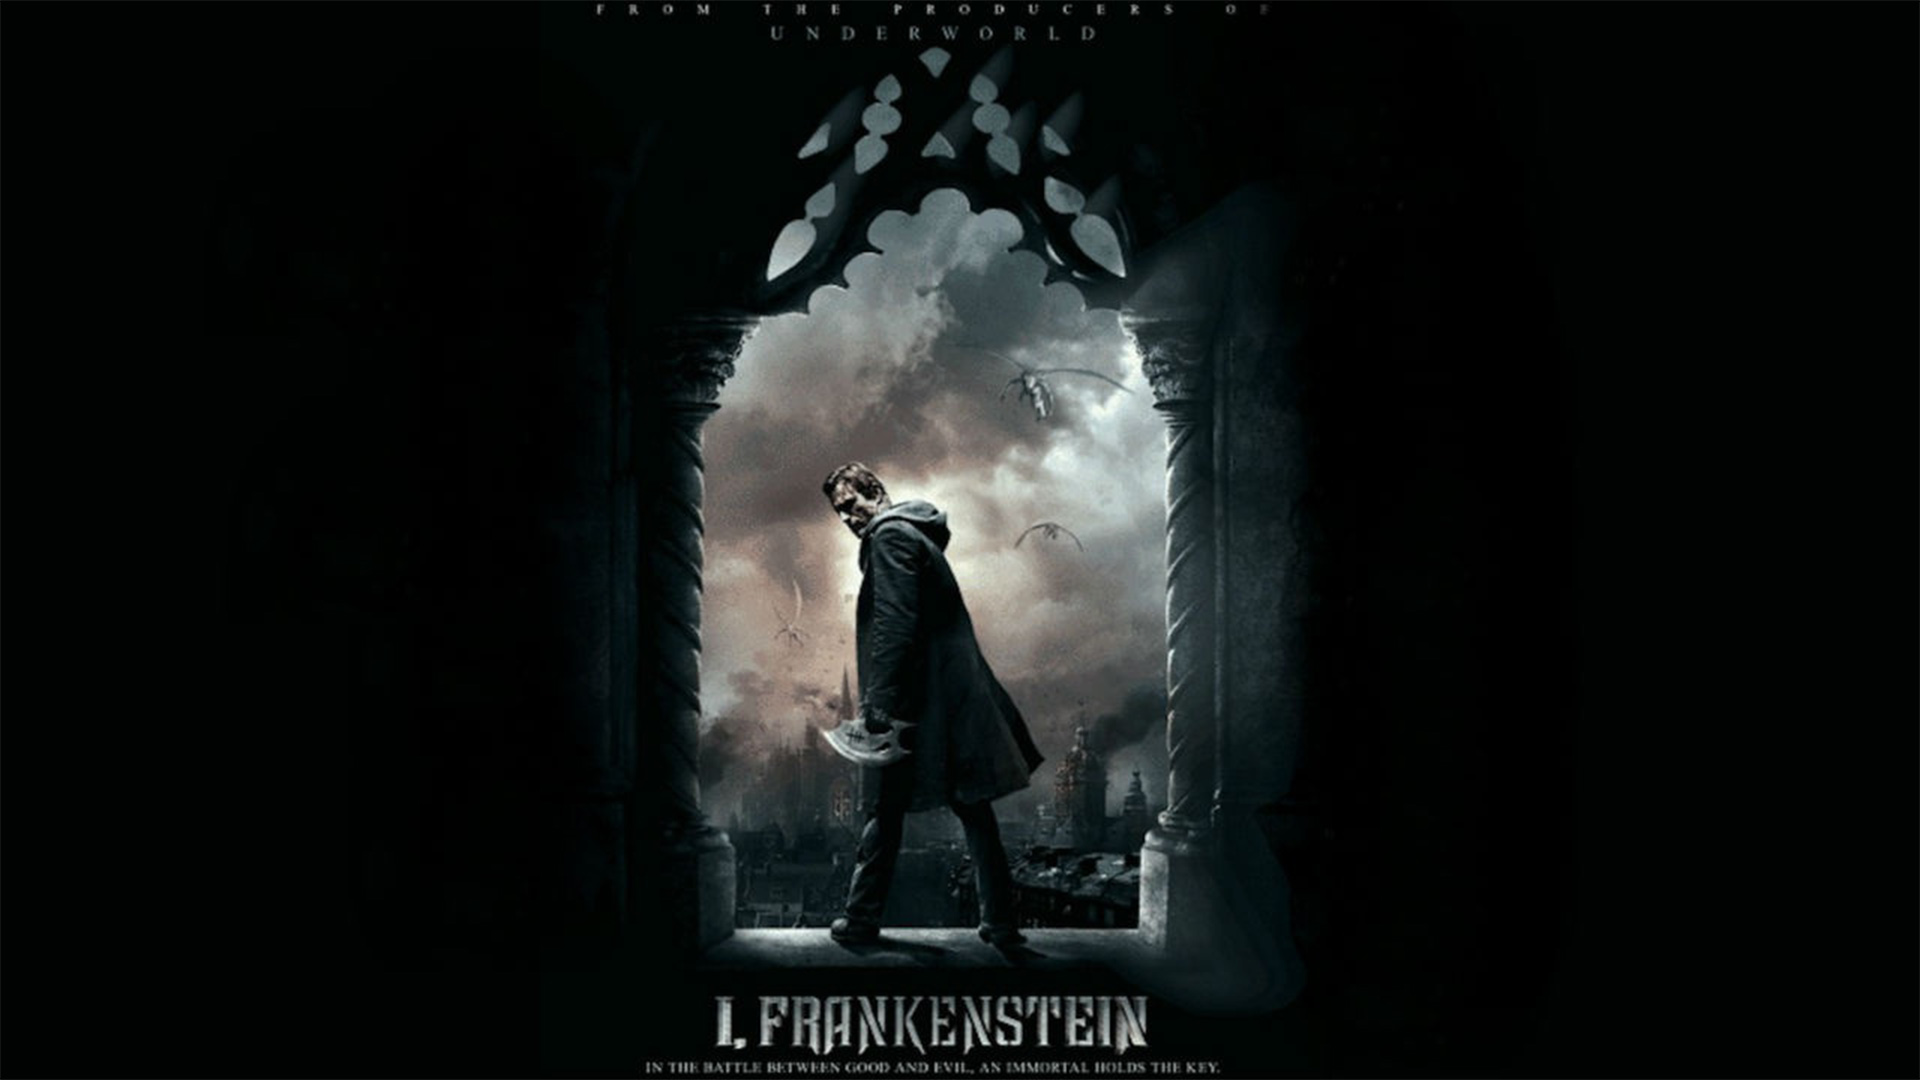 Frankenstein Poster Wallpaper High Definition Quality